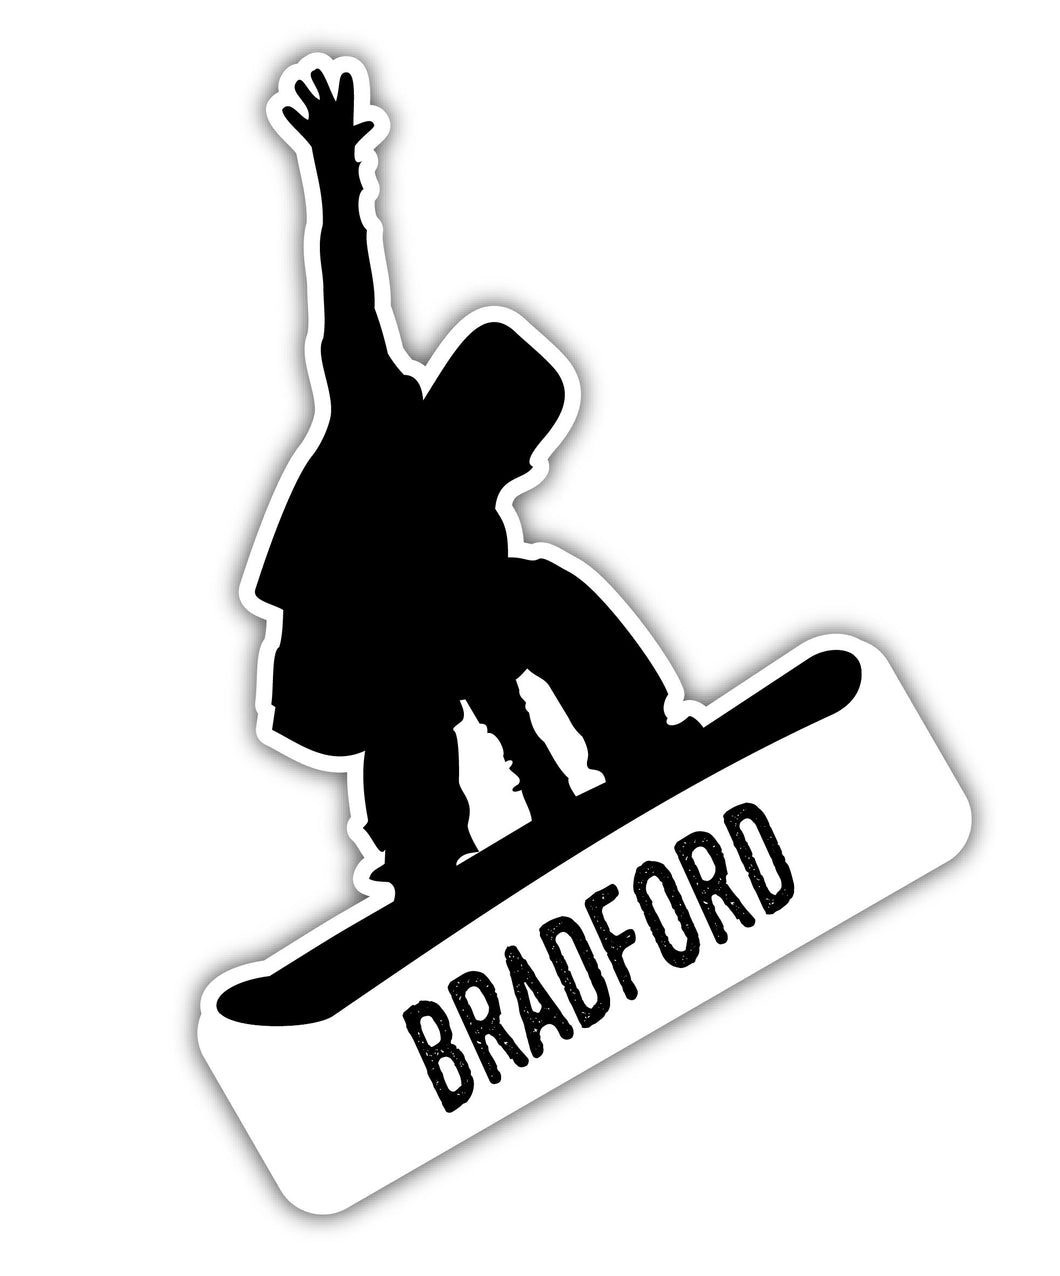 Bradford Massachusetts Ski Adventures Souvenir Approximately 5 x 2.5-Inch Vinyl Decal Sticker Goggle Design